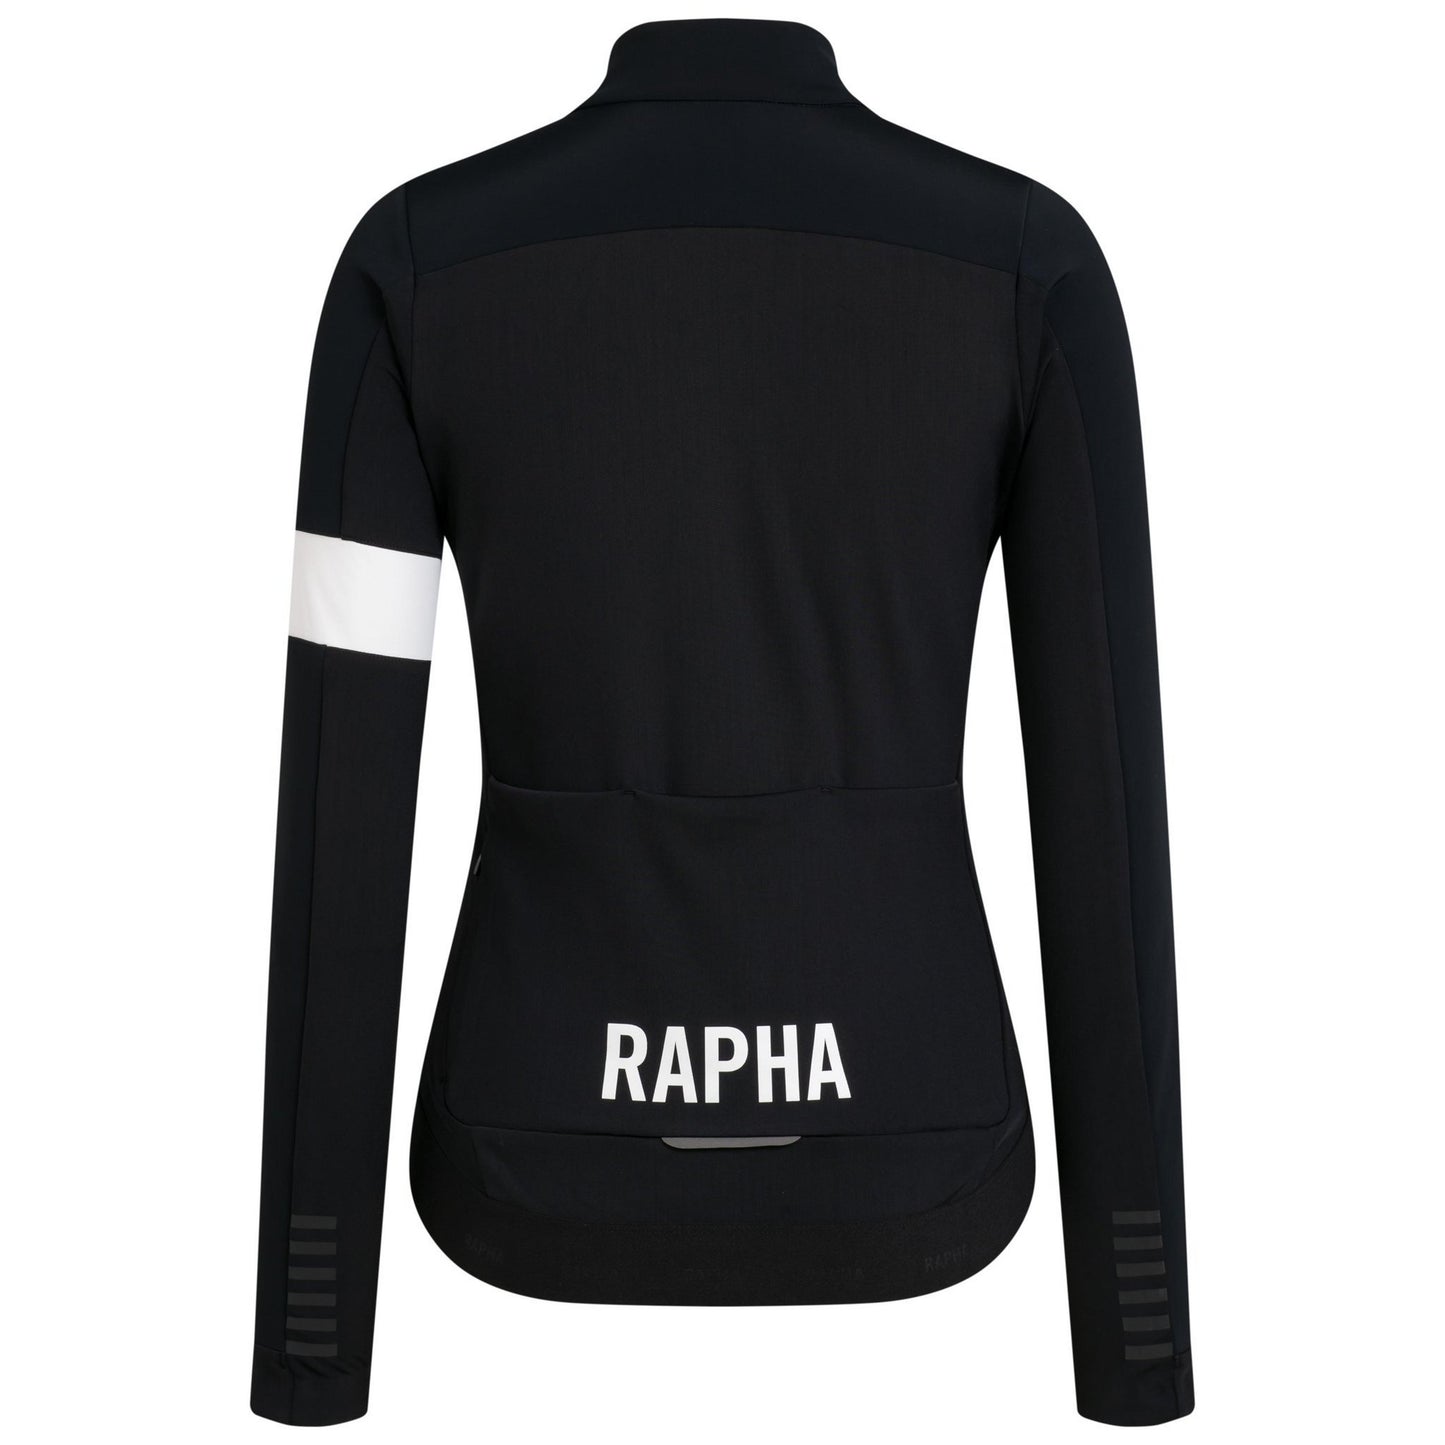 Rapha Women's Pro Team Winter Jacket - Black